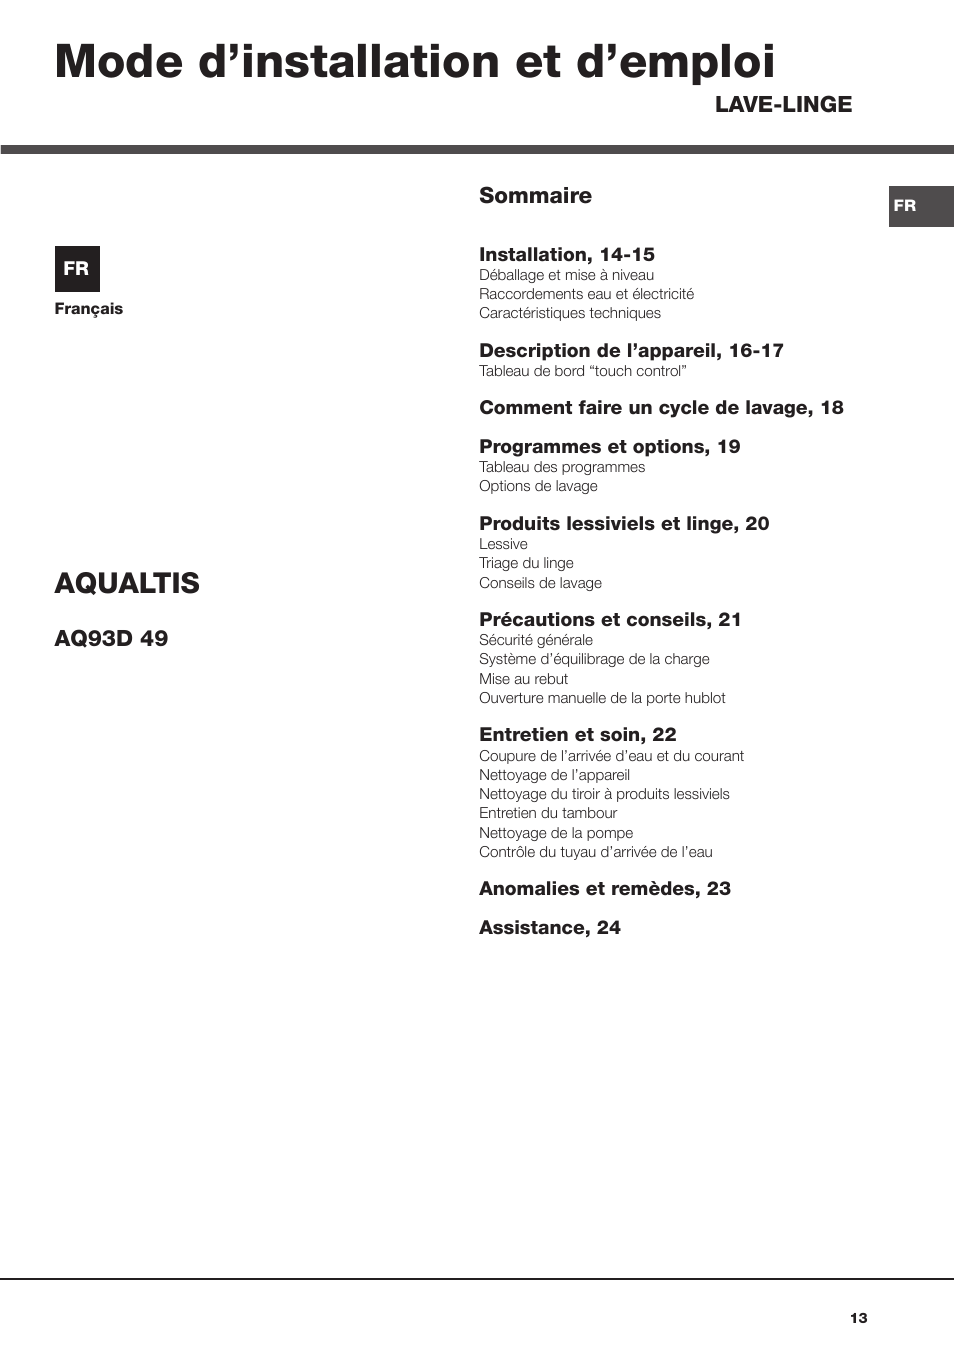 Mode d'installation et d'emploi, Aqualtis | Hotpoint Ariston Aqualtis AQ93D  49 User Manual | Page 13 / 72 | Original mode